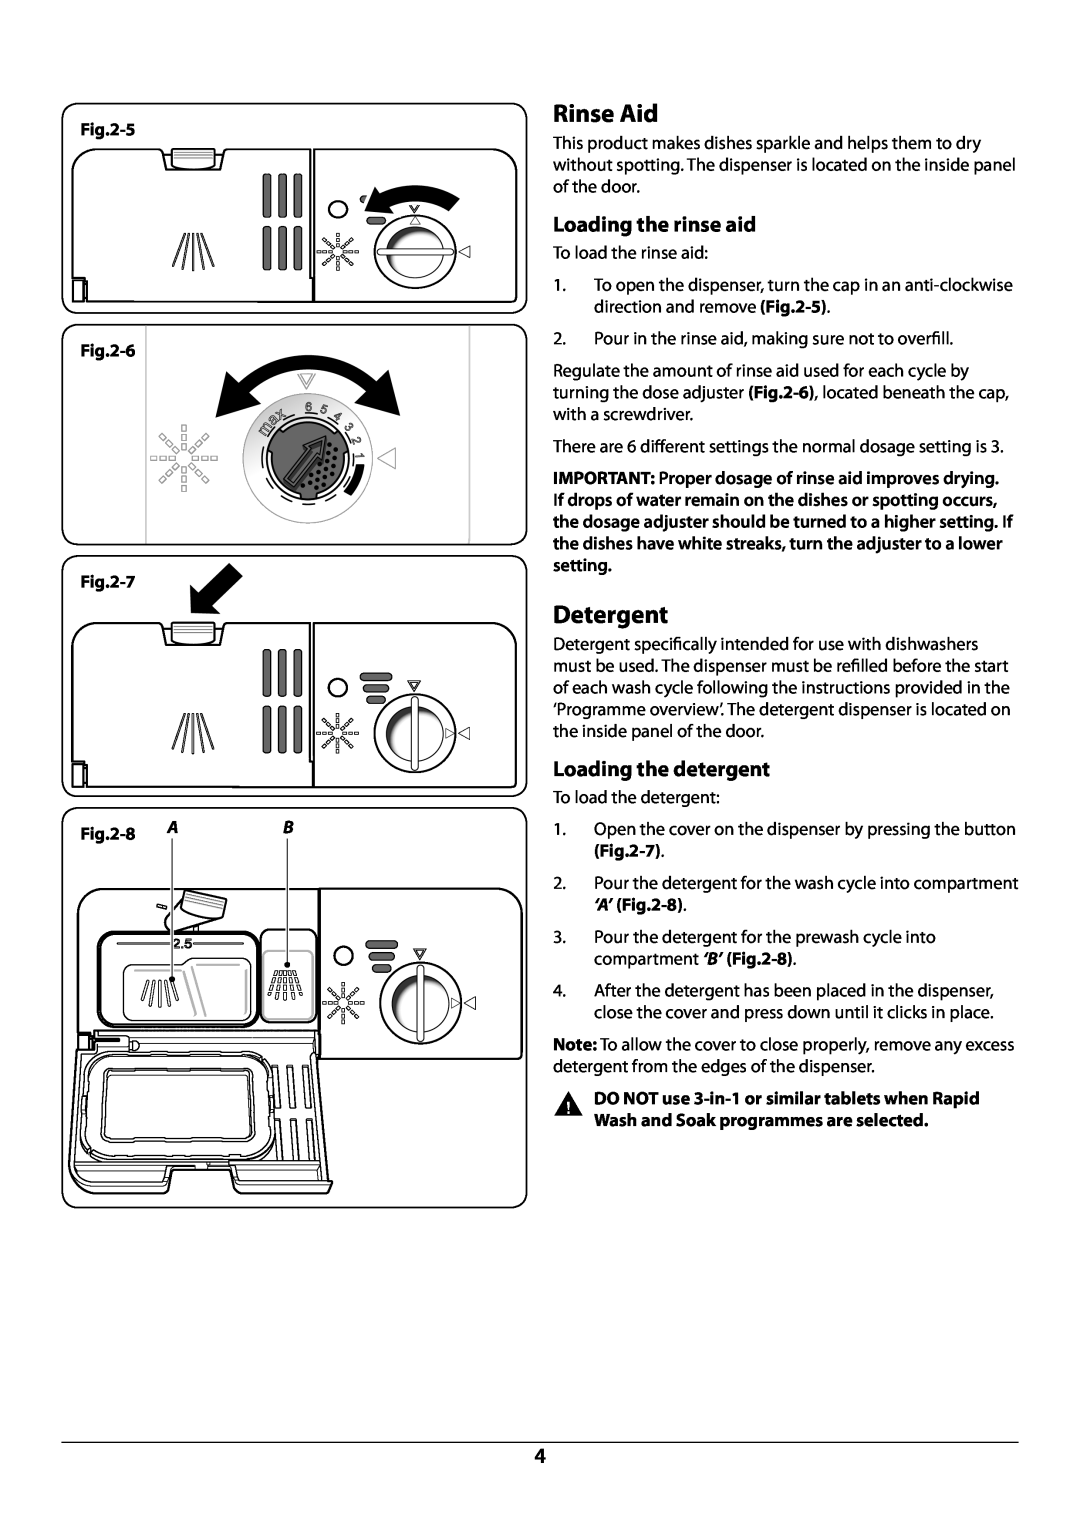 Rangemaster RDW945FI manual Rinse Aid, Detergent, Loading the rinse aid, Loading the detergent 